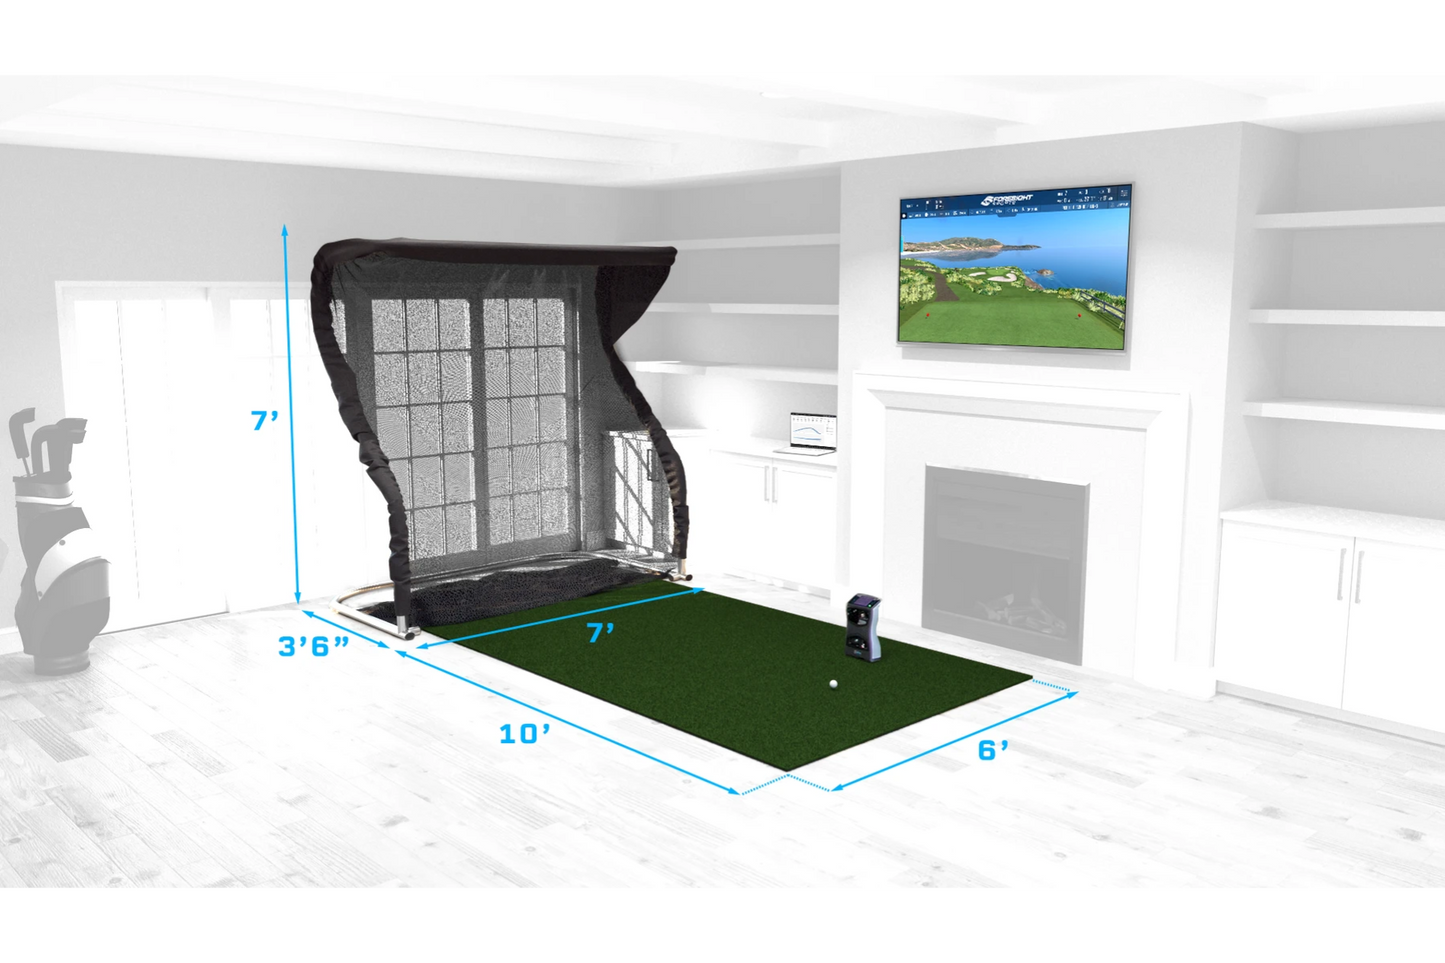 Sim in a box Net Par Golf Simulator Package Dimensions